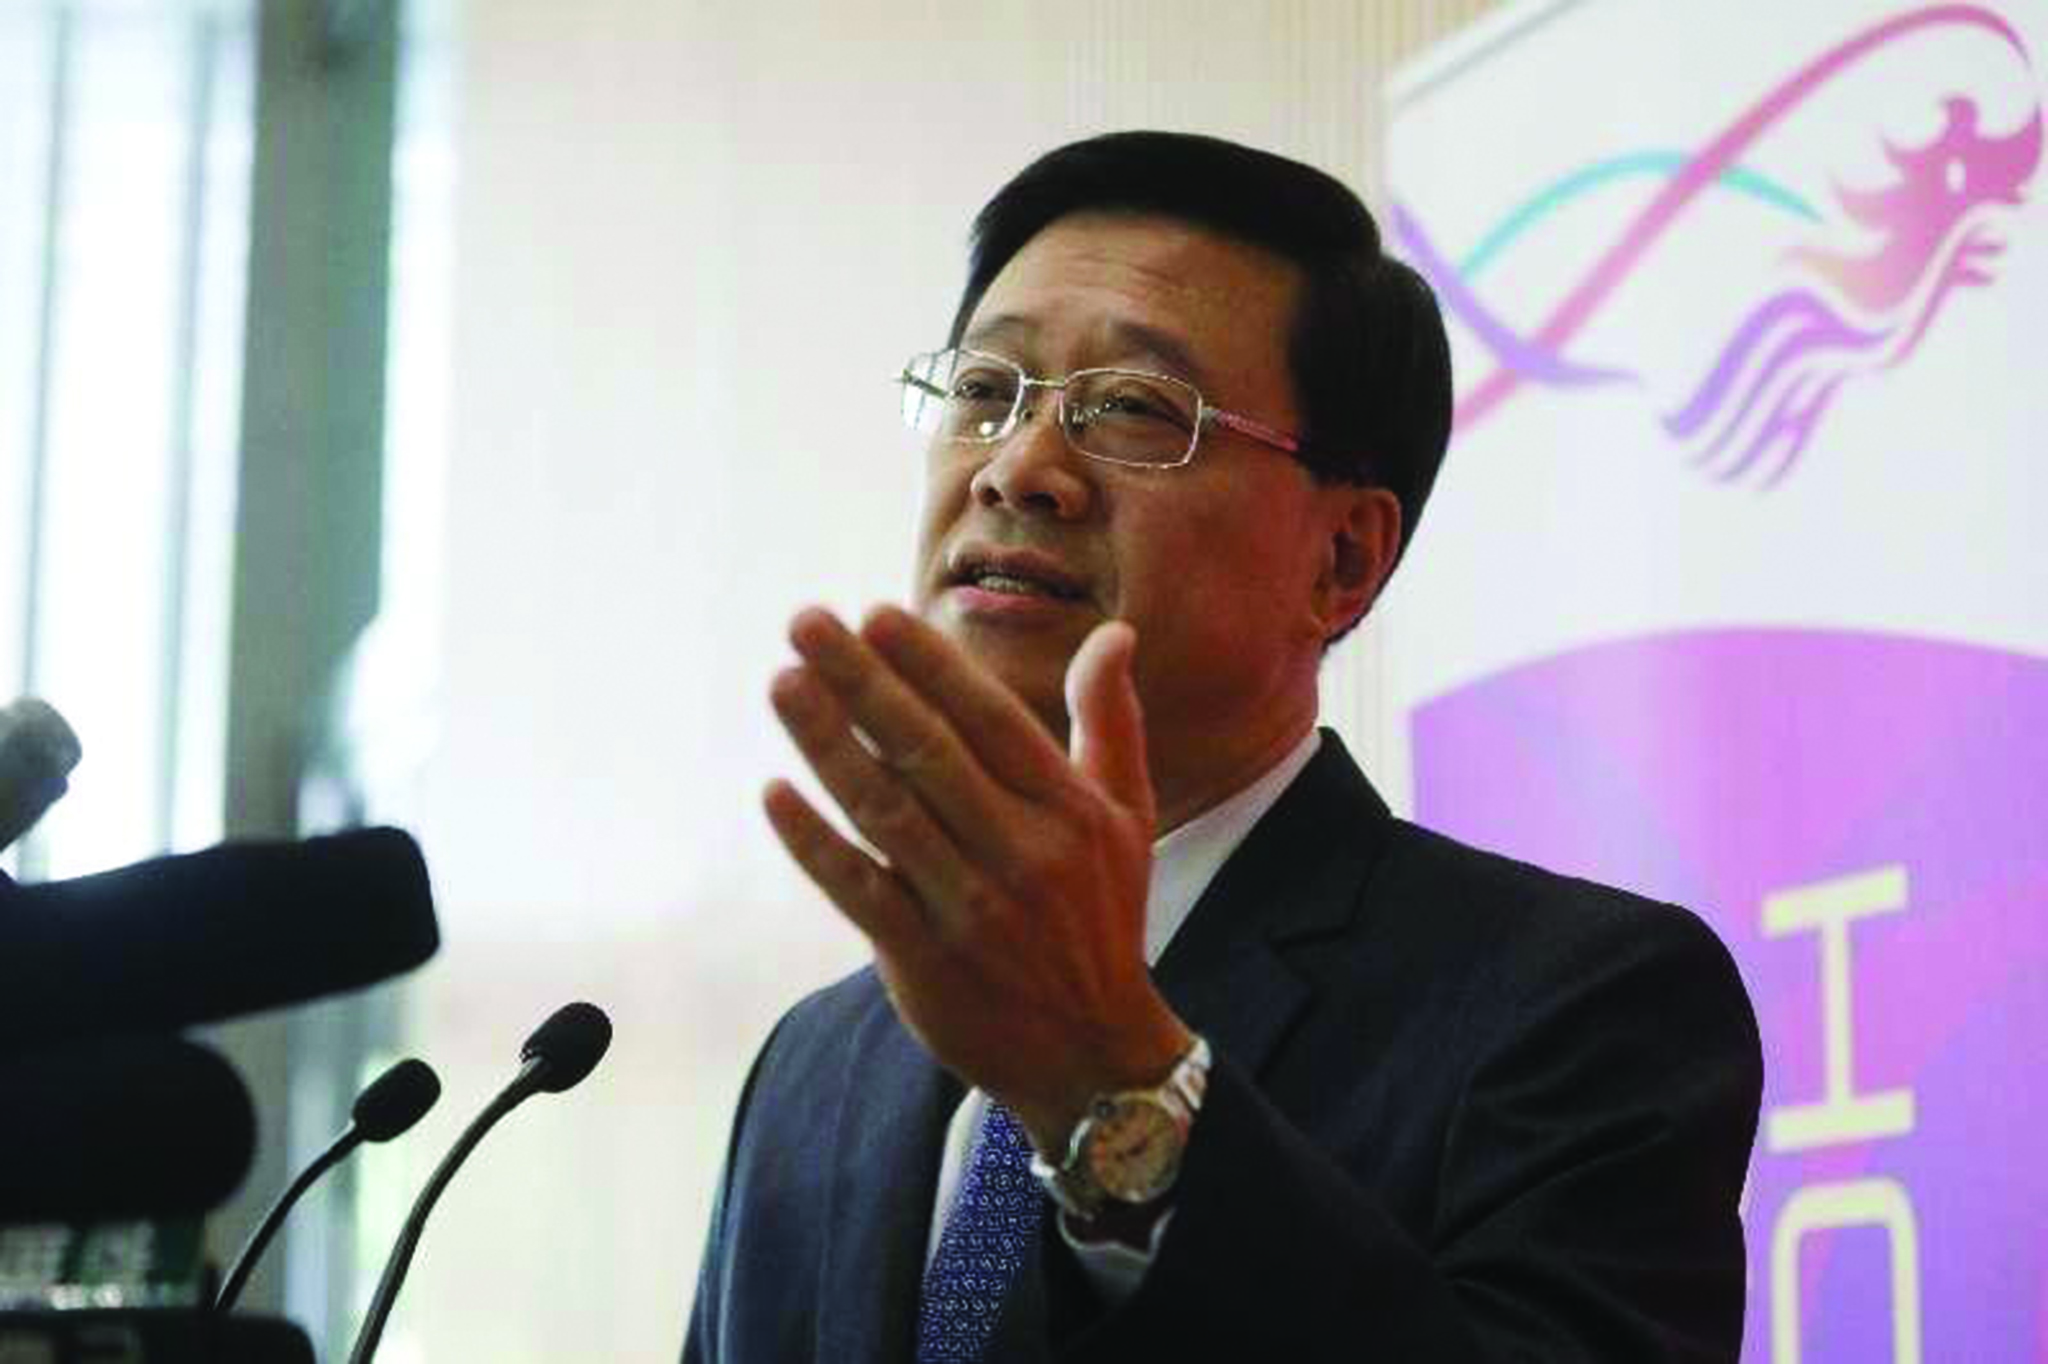 John Lee apresenta formalmente candidatura para liderar Hong Kong